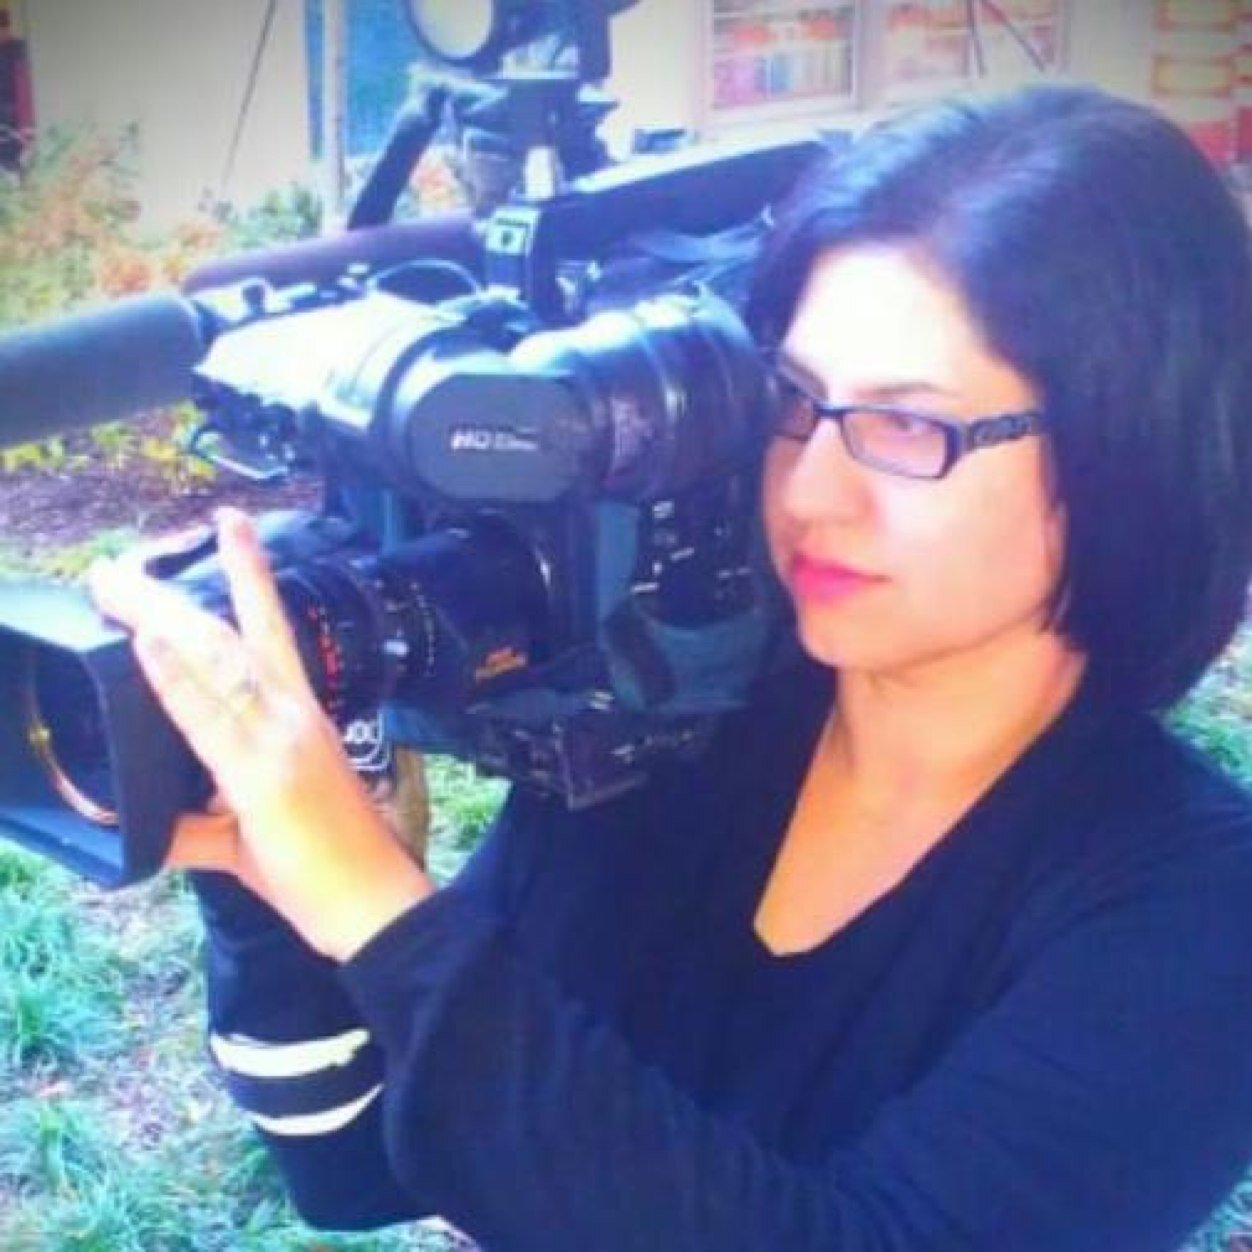 Photojournalist at FOX 5 Atlanta